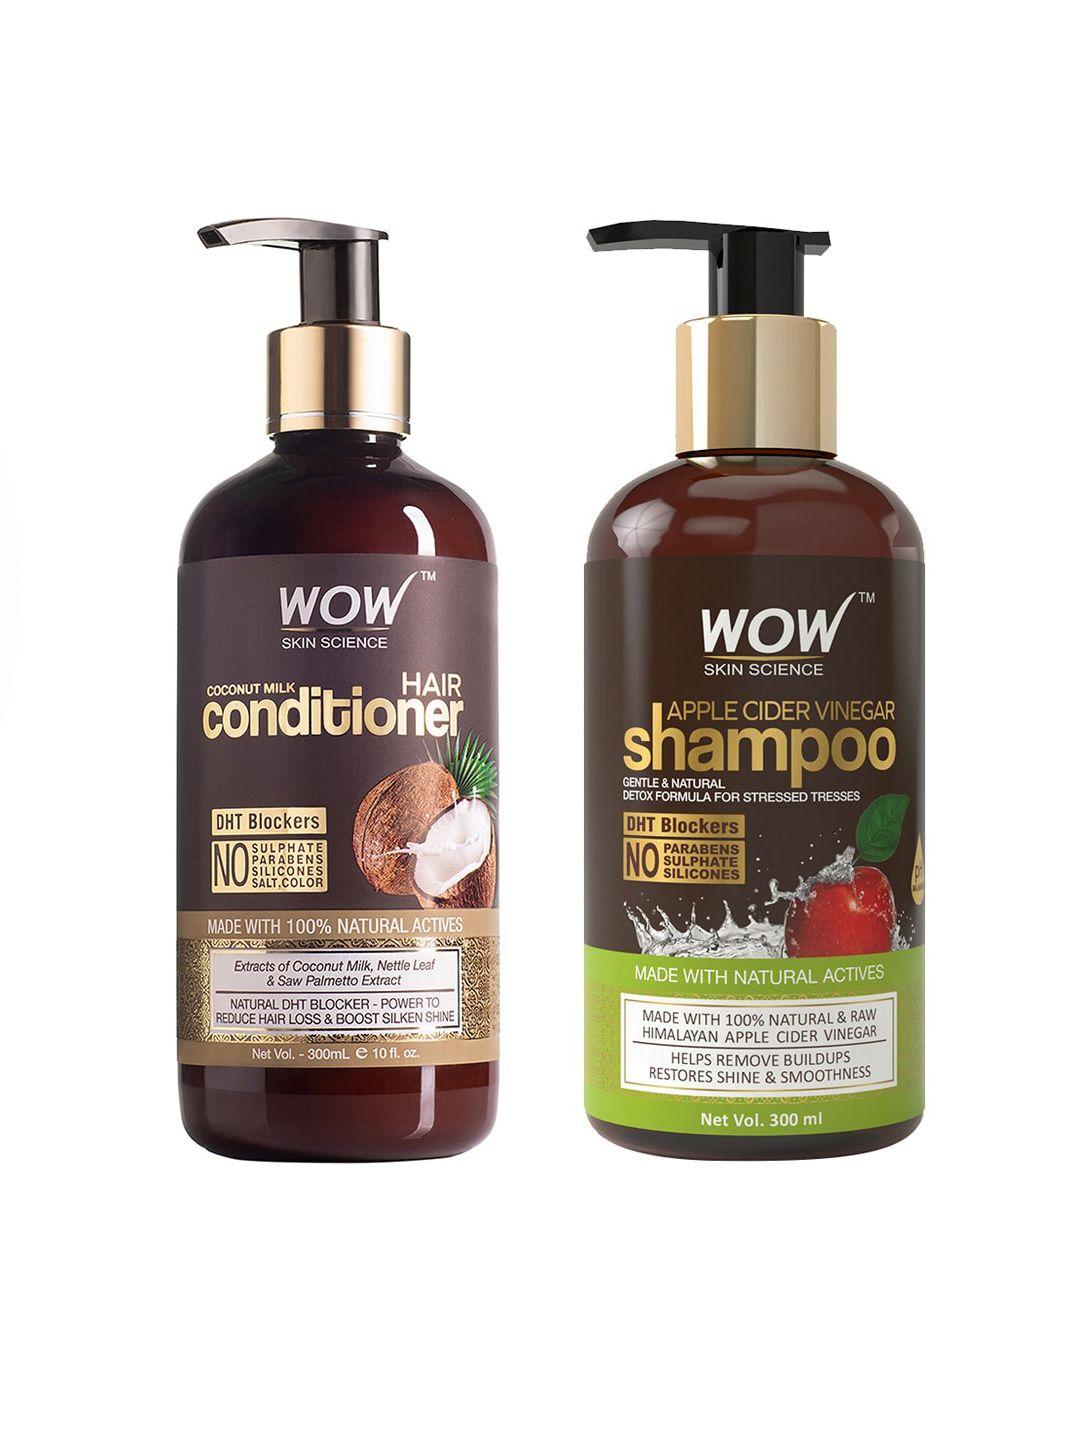 wow skin science set of apple cider vinegar shampoo & coconut milk conditioner